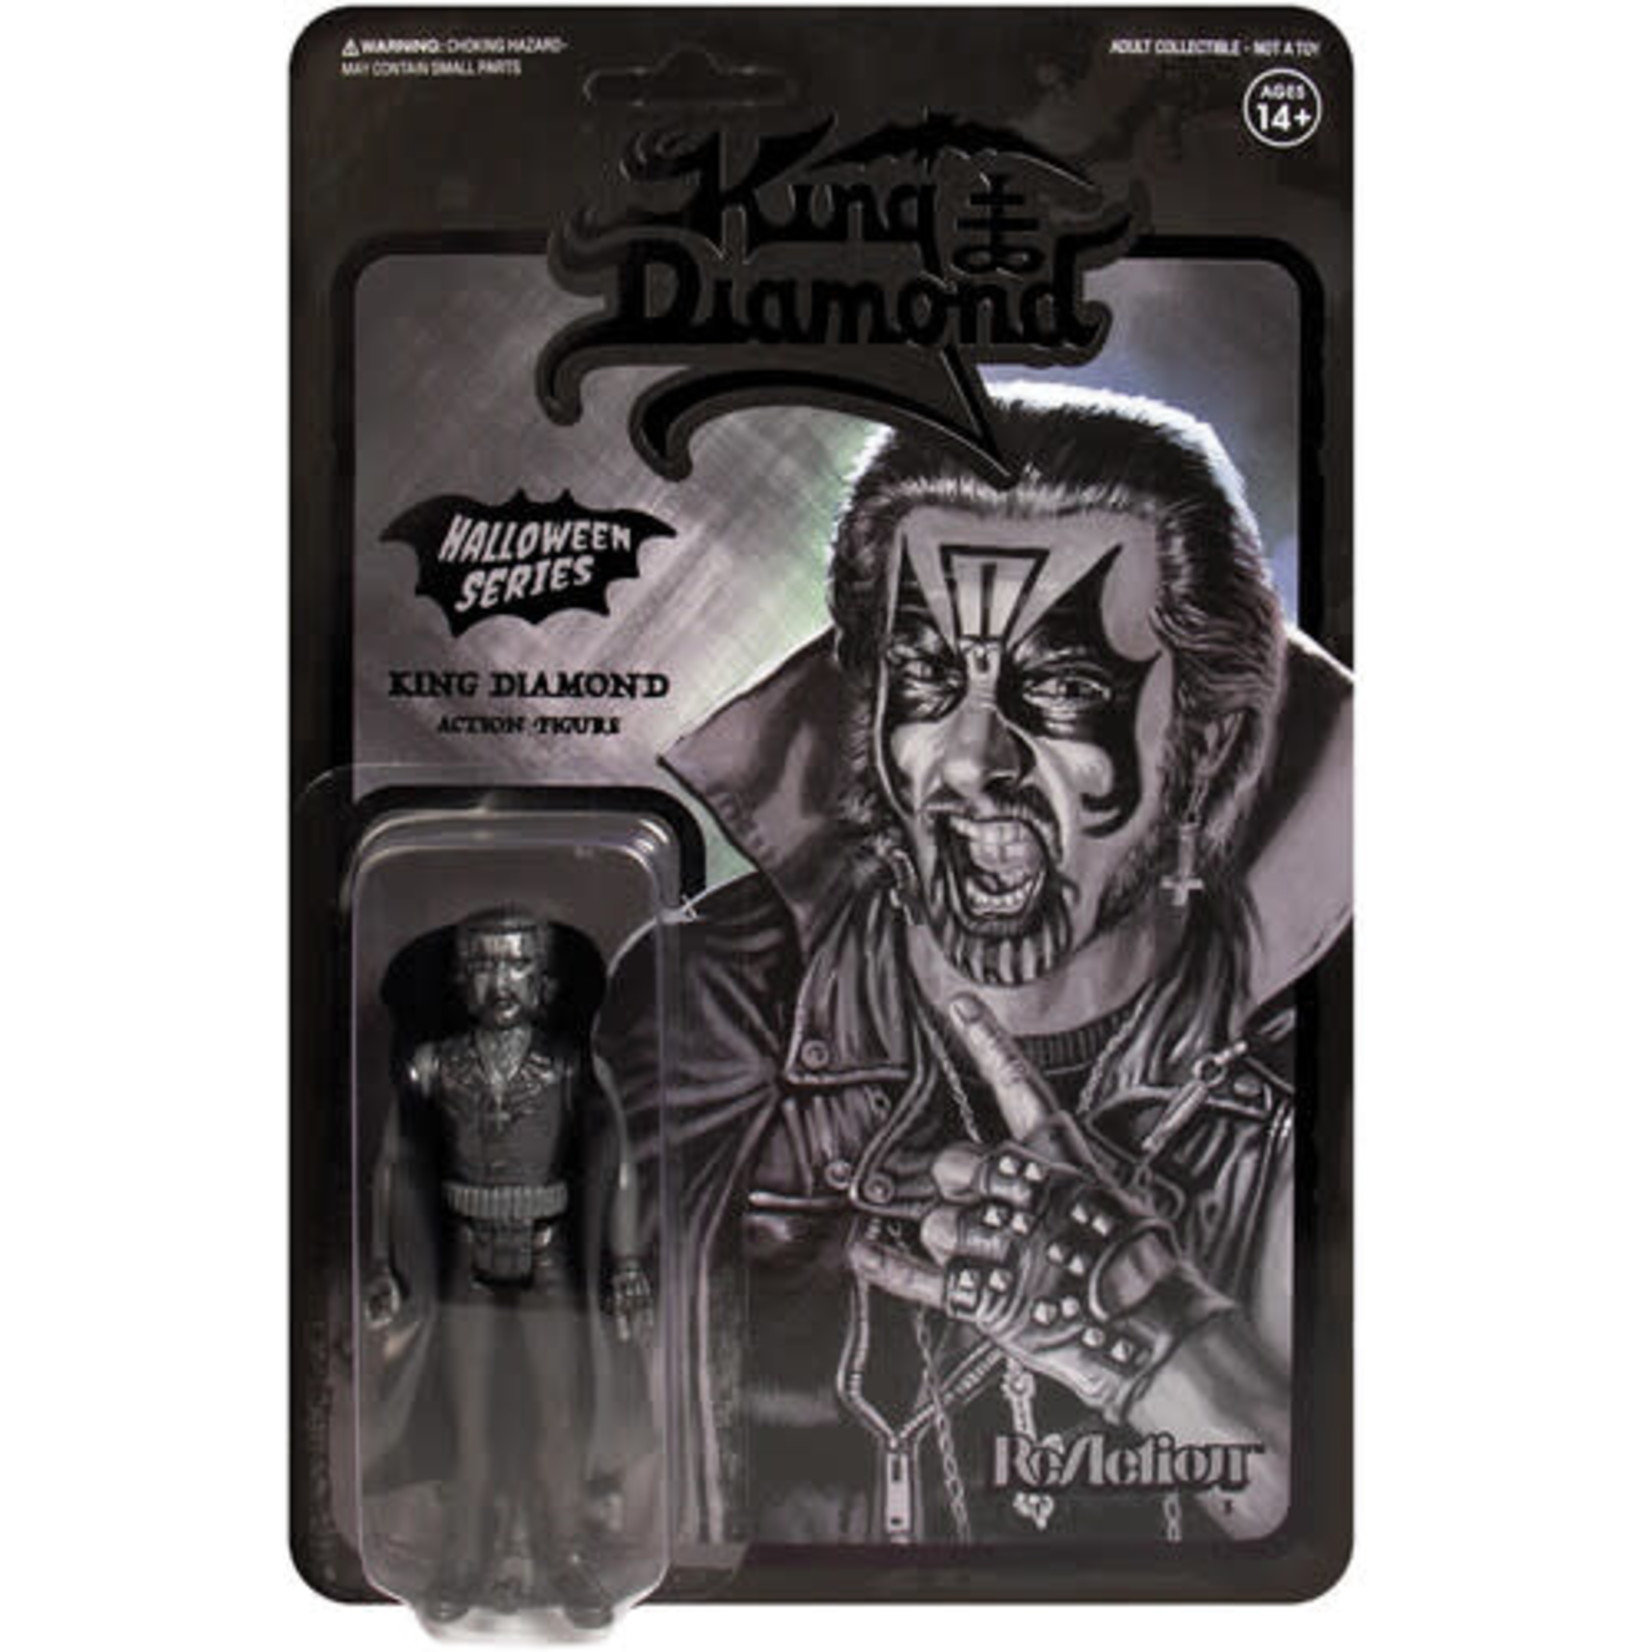 ReAction Figures - King Diamond: Halloween Series Black